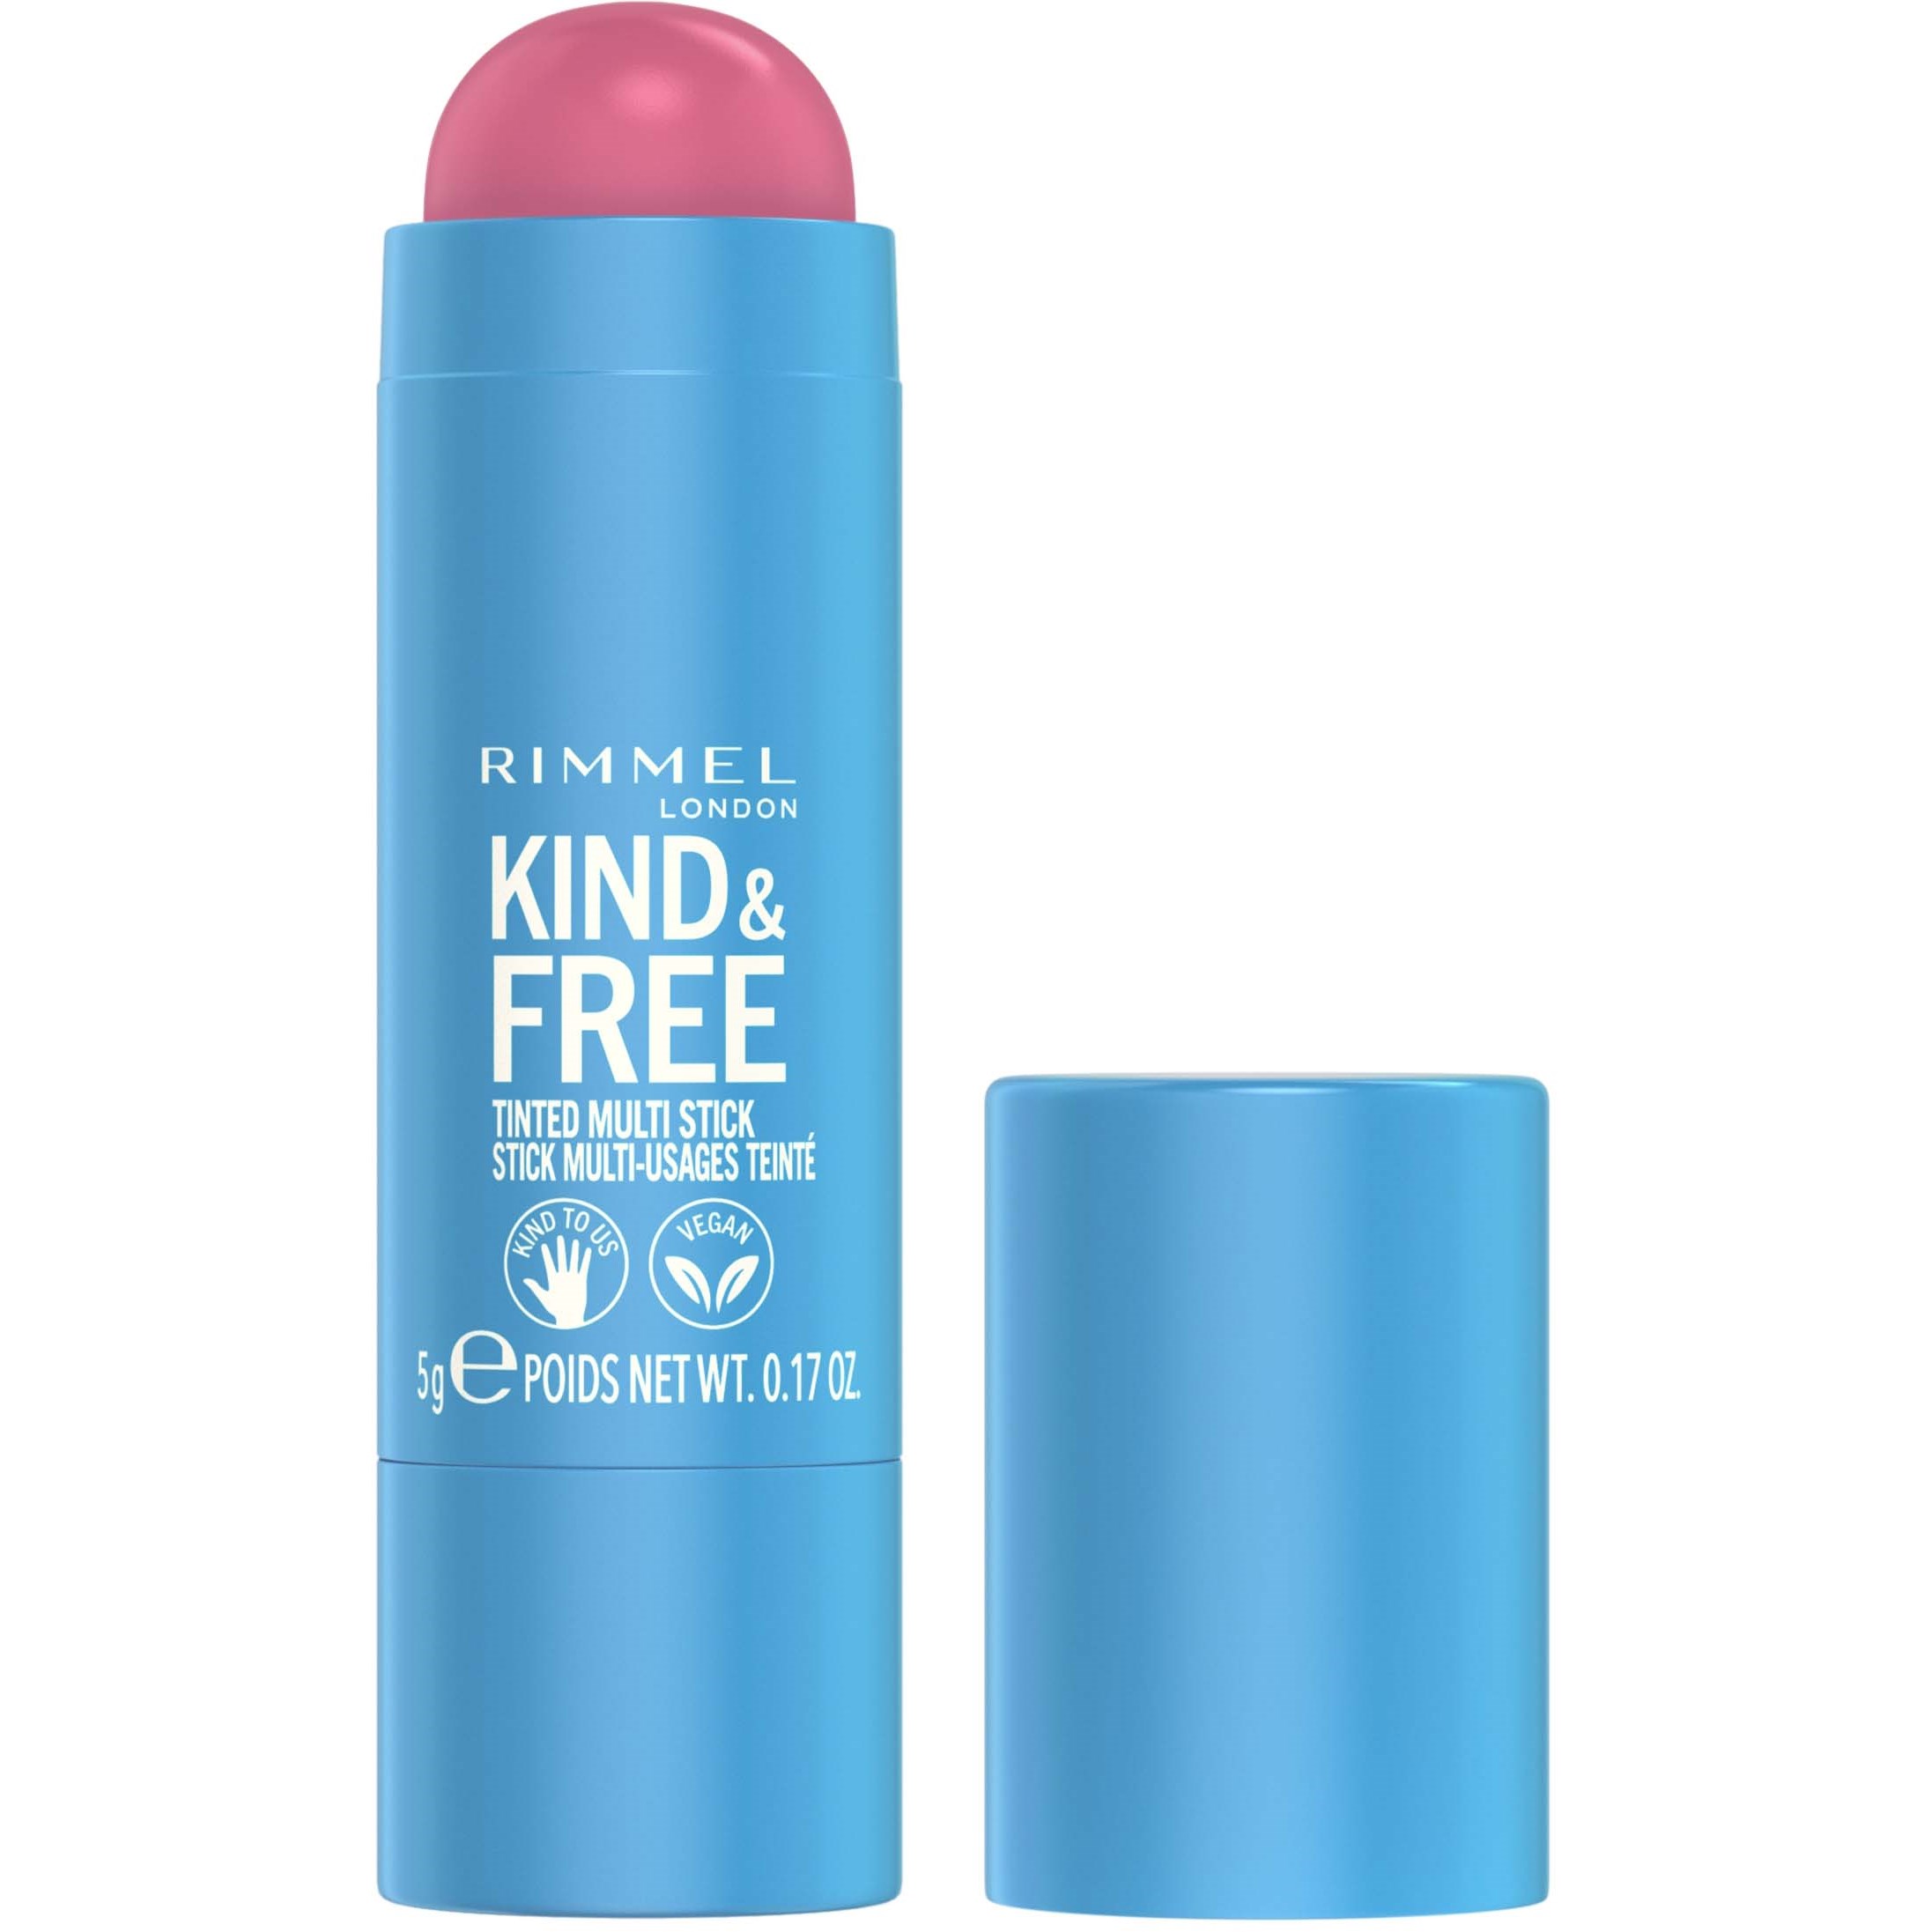 Rimmel Kind & Free Tinted Multi Stick 003 Pink Heat